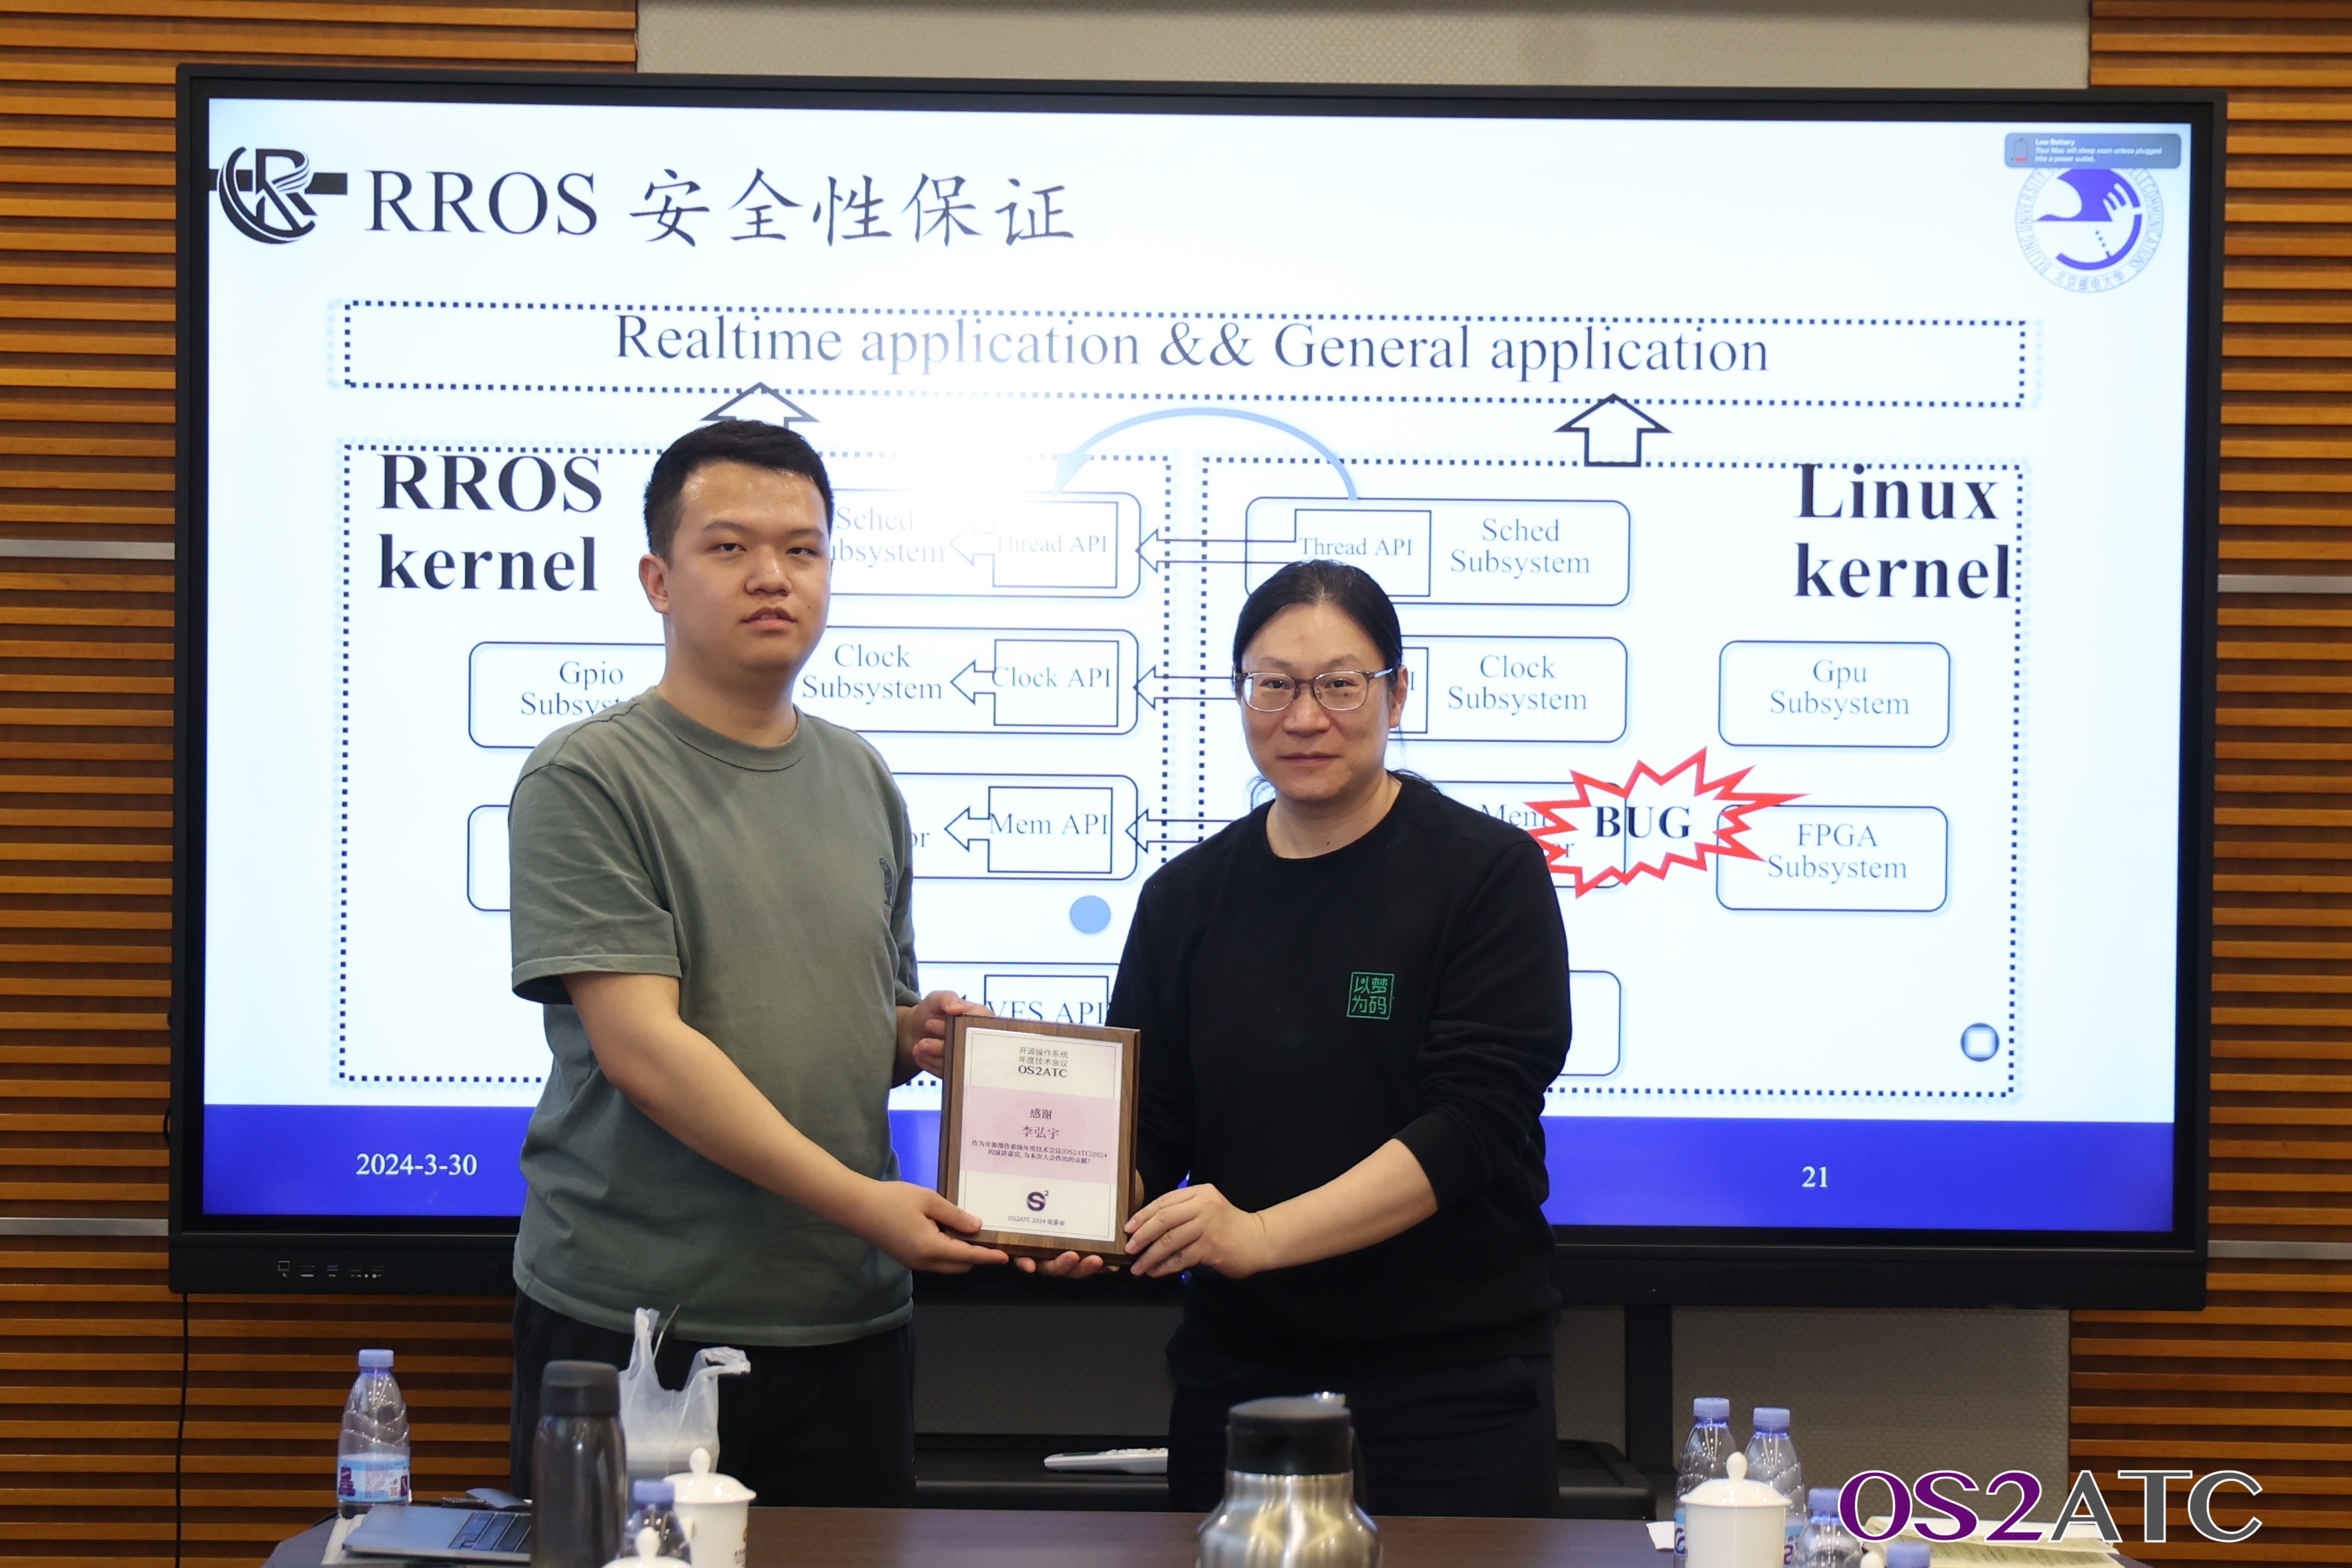 Hongyu Li gets an award for his presentation